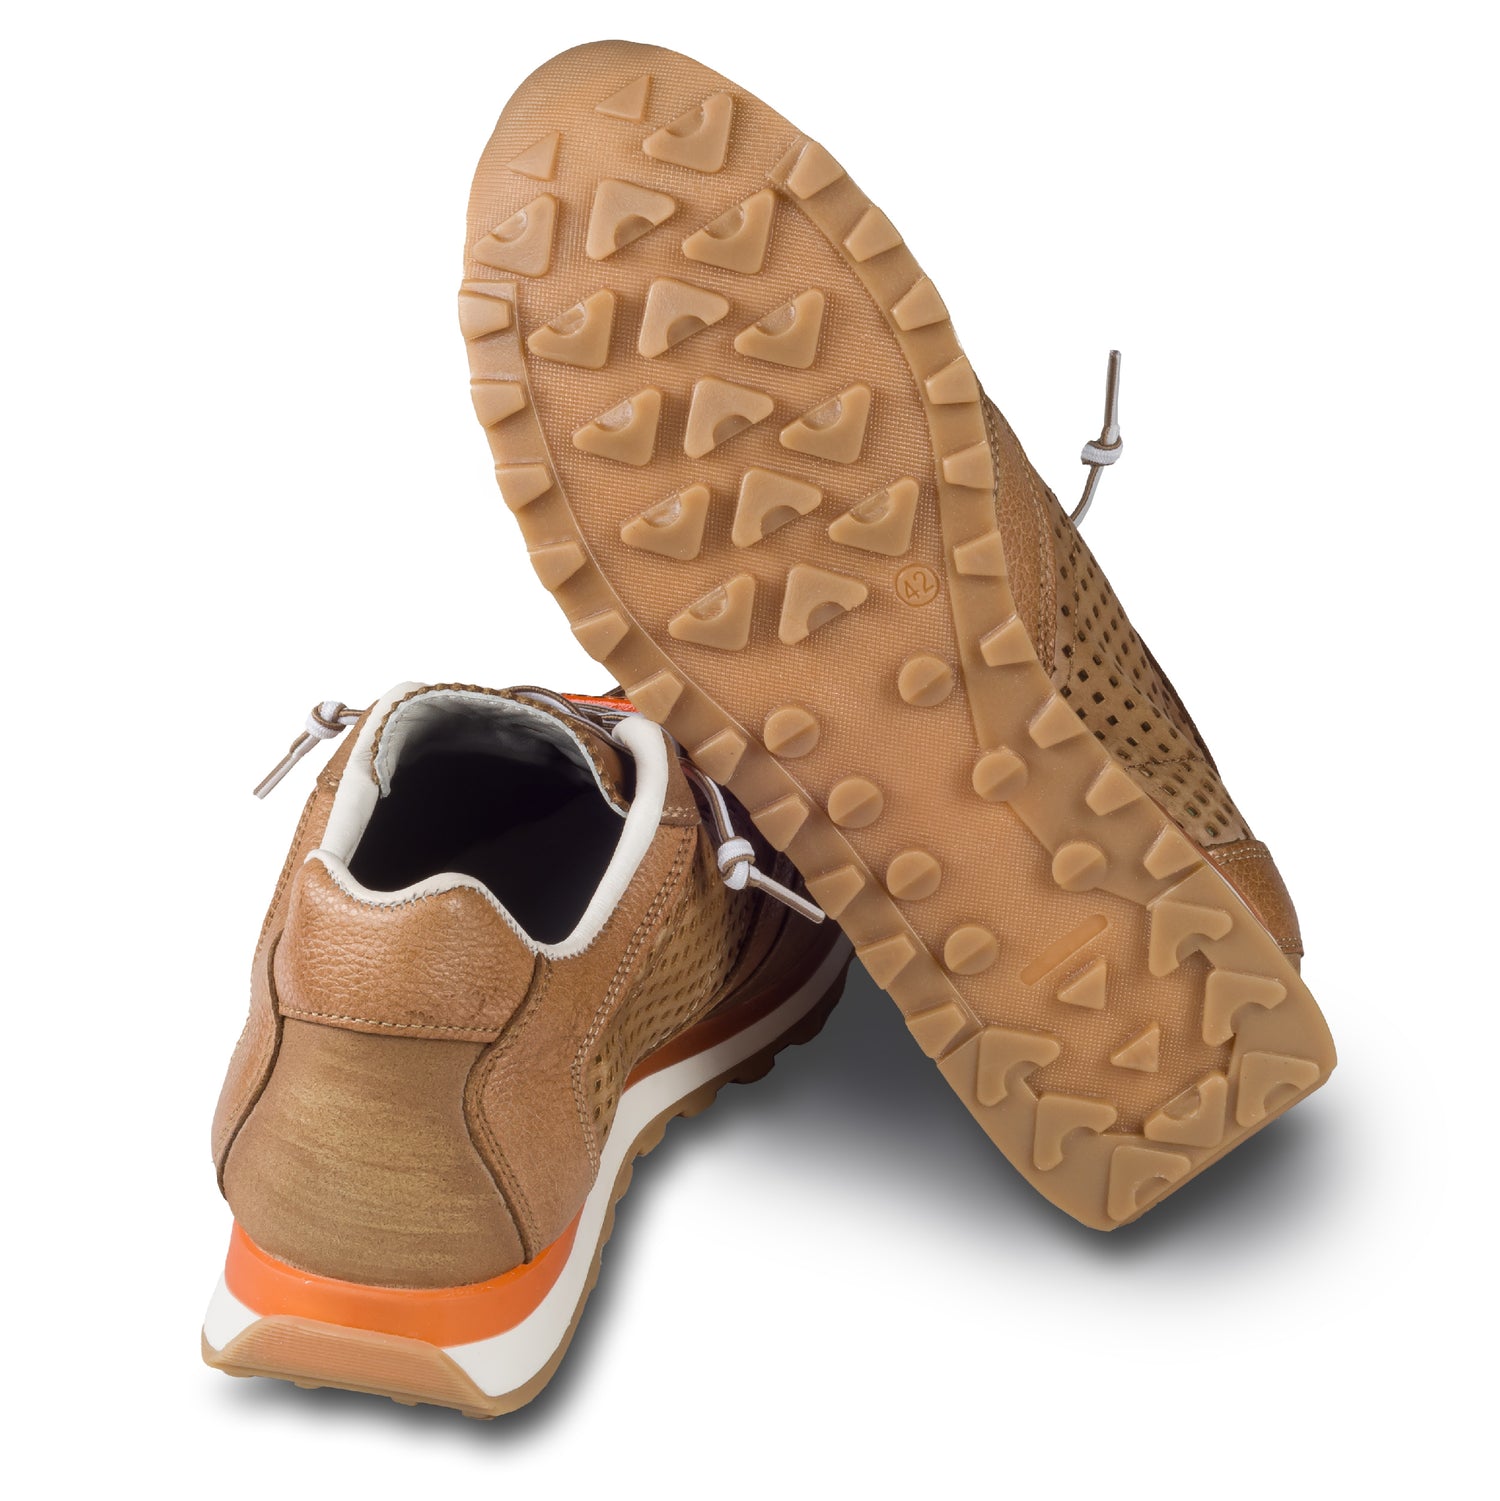 CETTI Herren Leder Sneaker, Modell „C848“ in hell braun (used tin cuero), Made in Spain. Ansicht der Ferse und Sohlenunterseite. Ansicht der Ferse und Sohlenunterseite. 